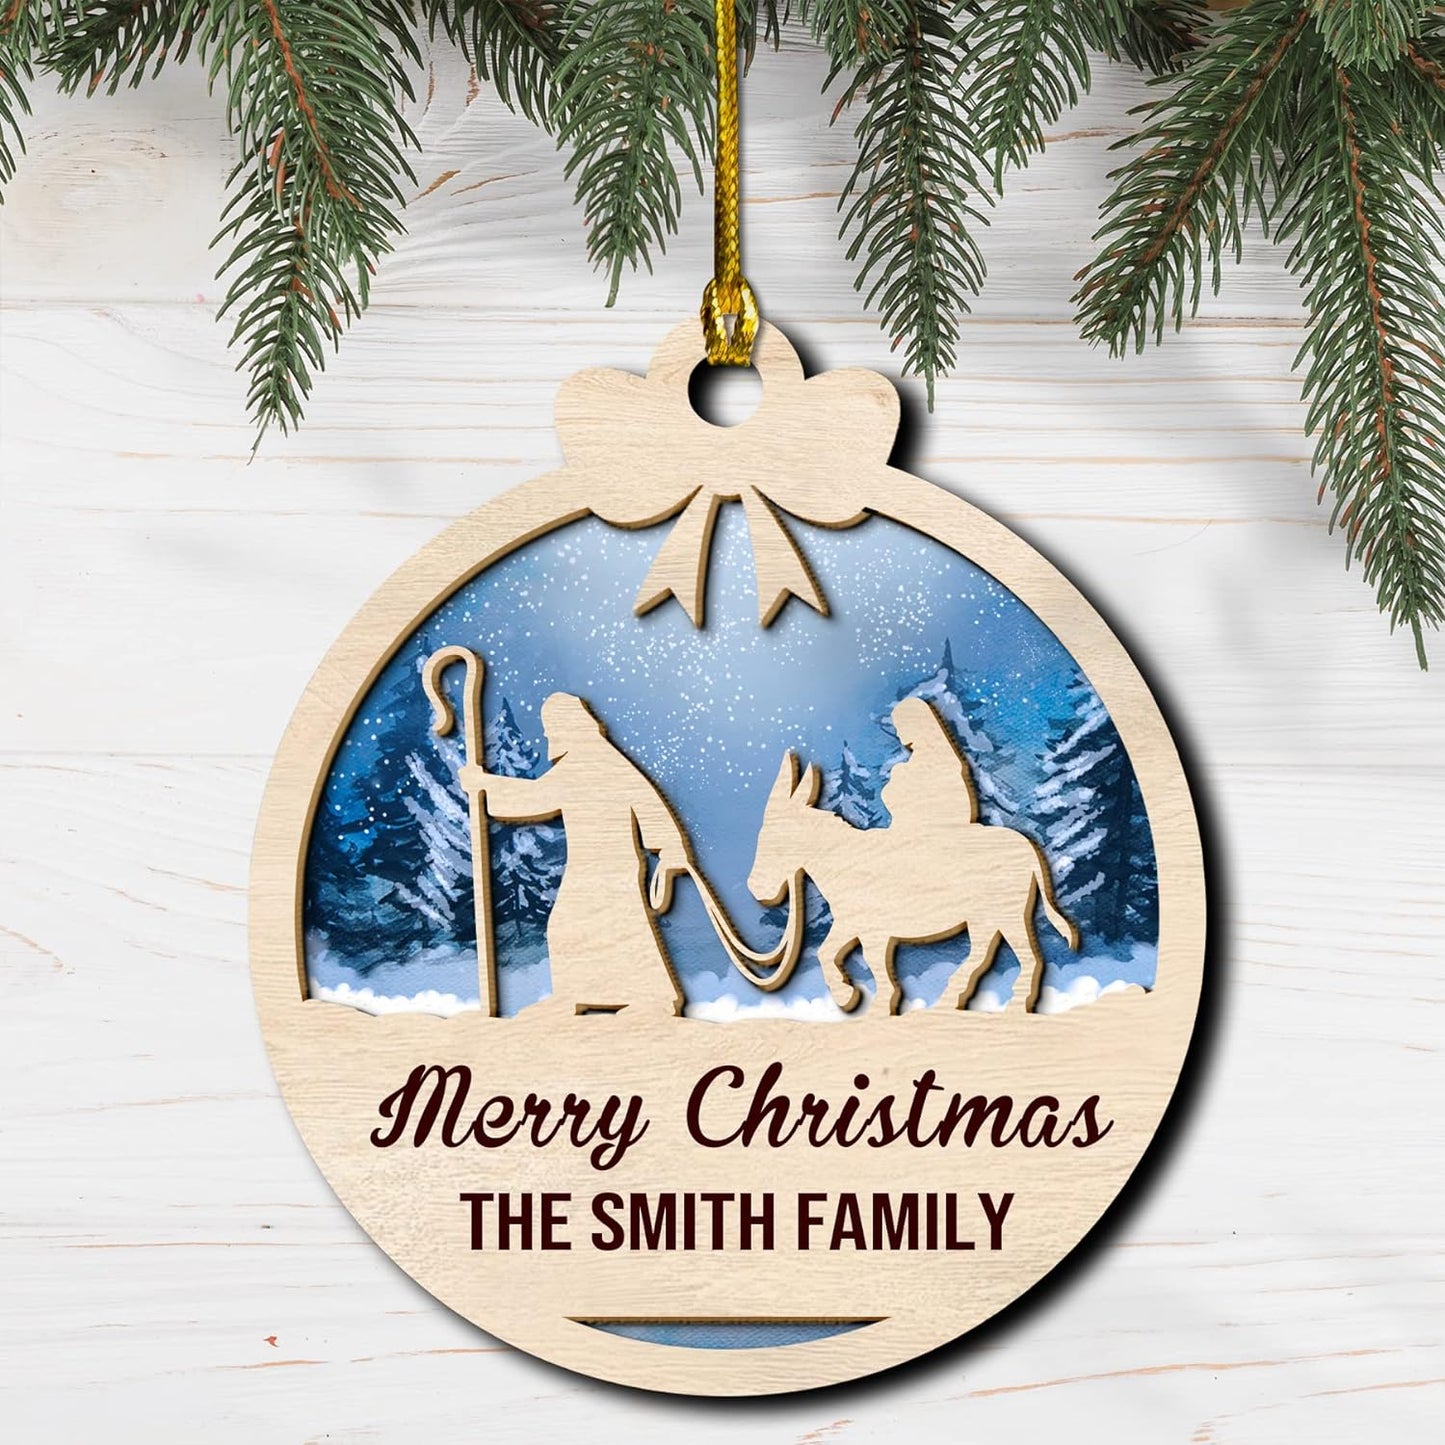 Personalized Nativity Scene Christmas Wood Layered Ornaments - Personalized Ornaments for Christmas Tree Decorations